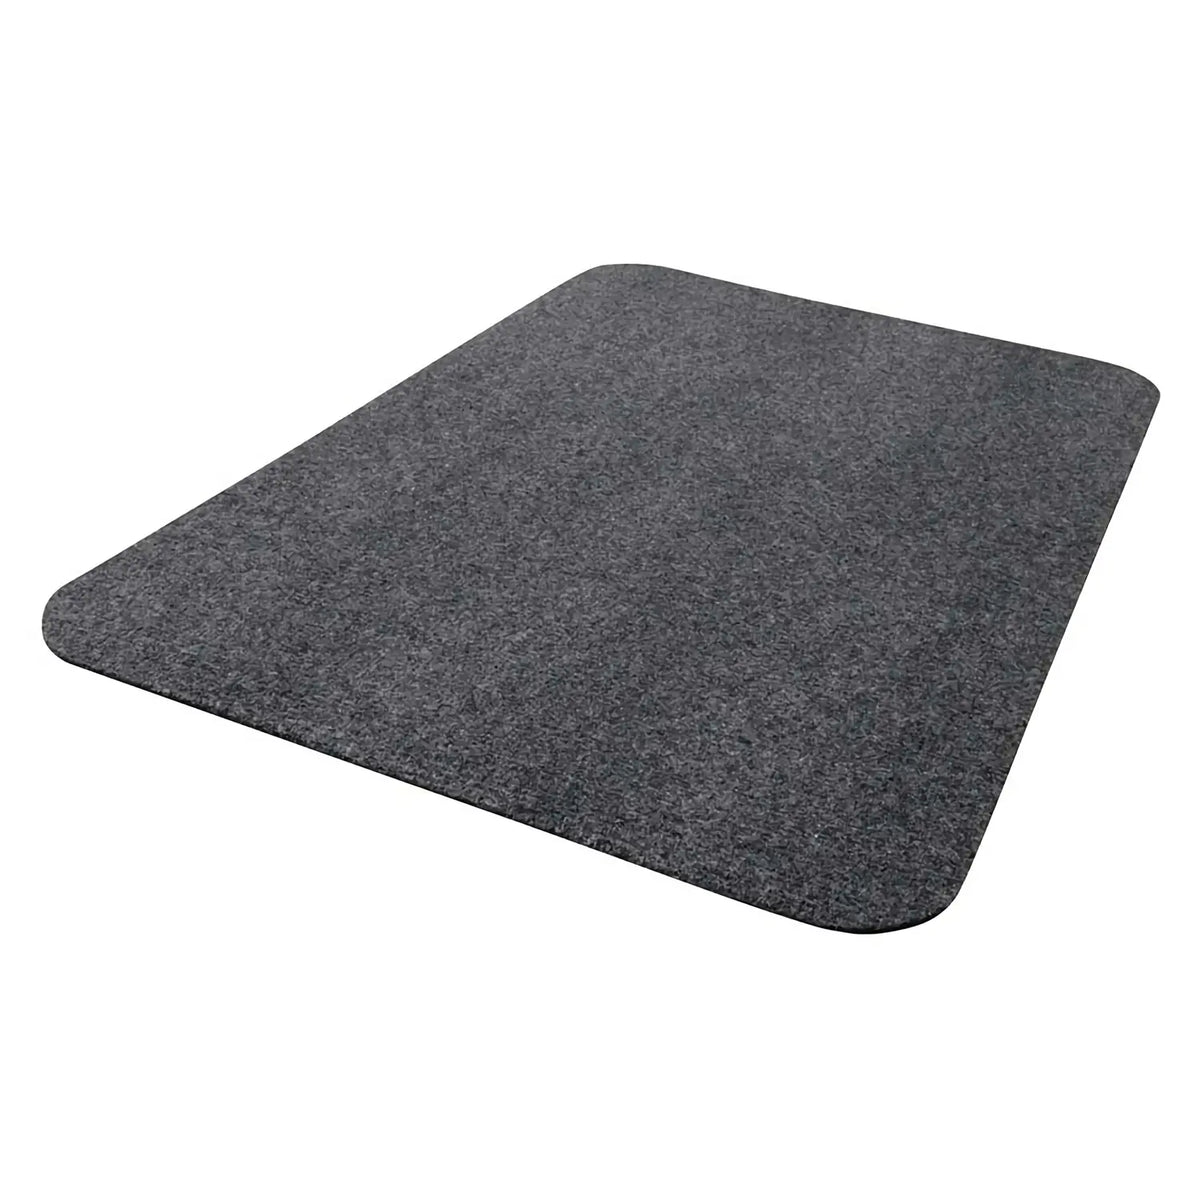 3M Polypropylene Basic Doormat